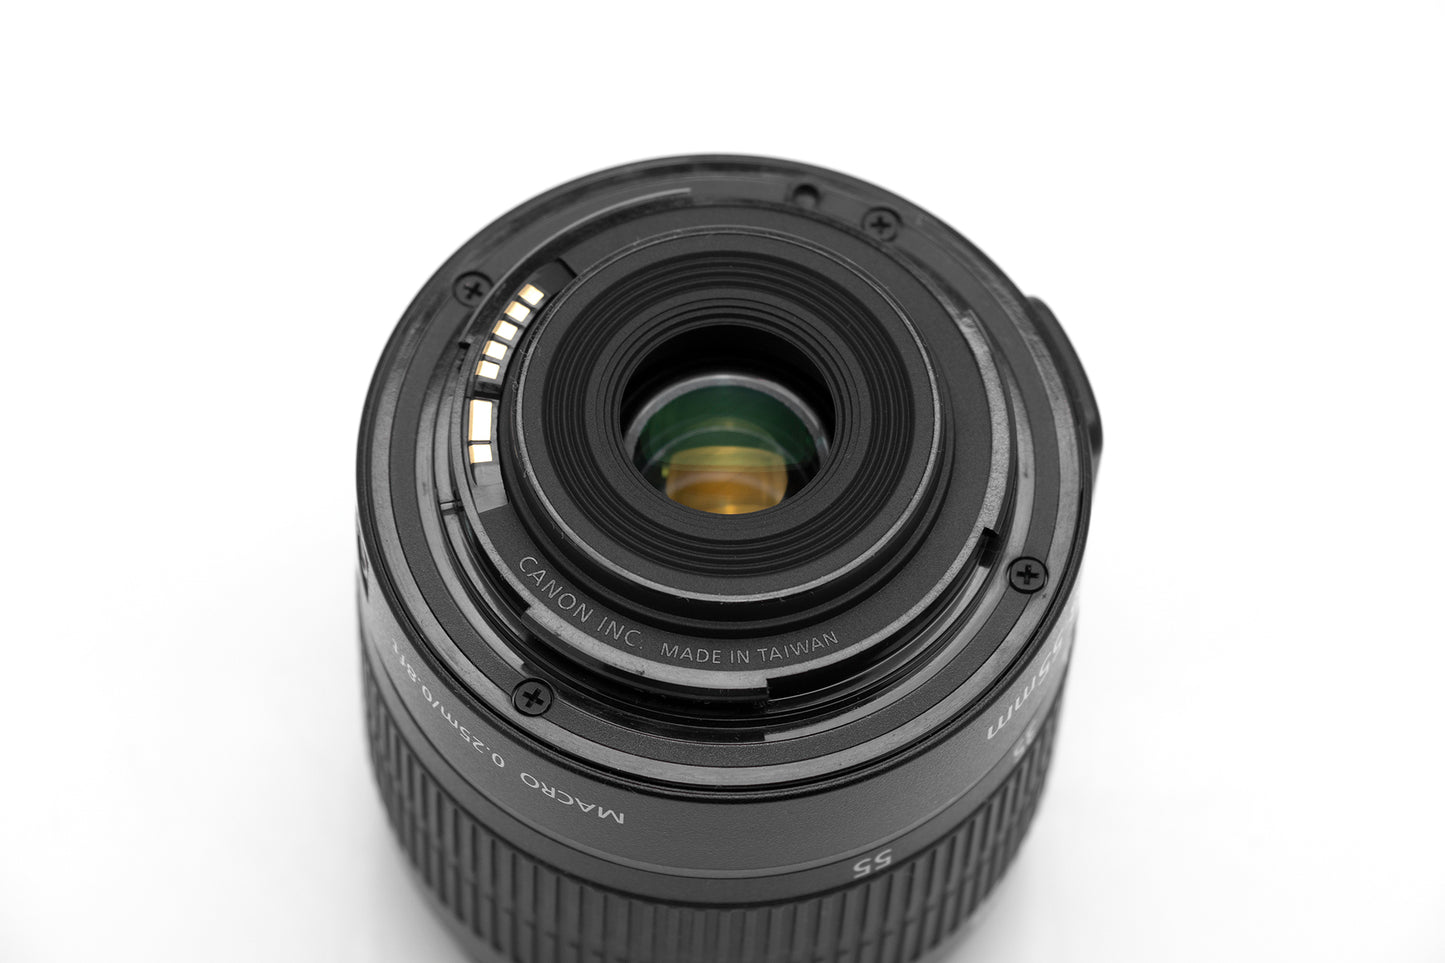 Used Canon EF-S 18-55mm Mark III Lens